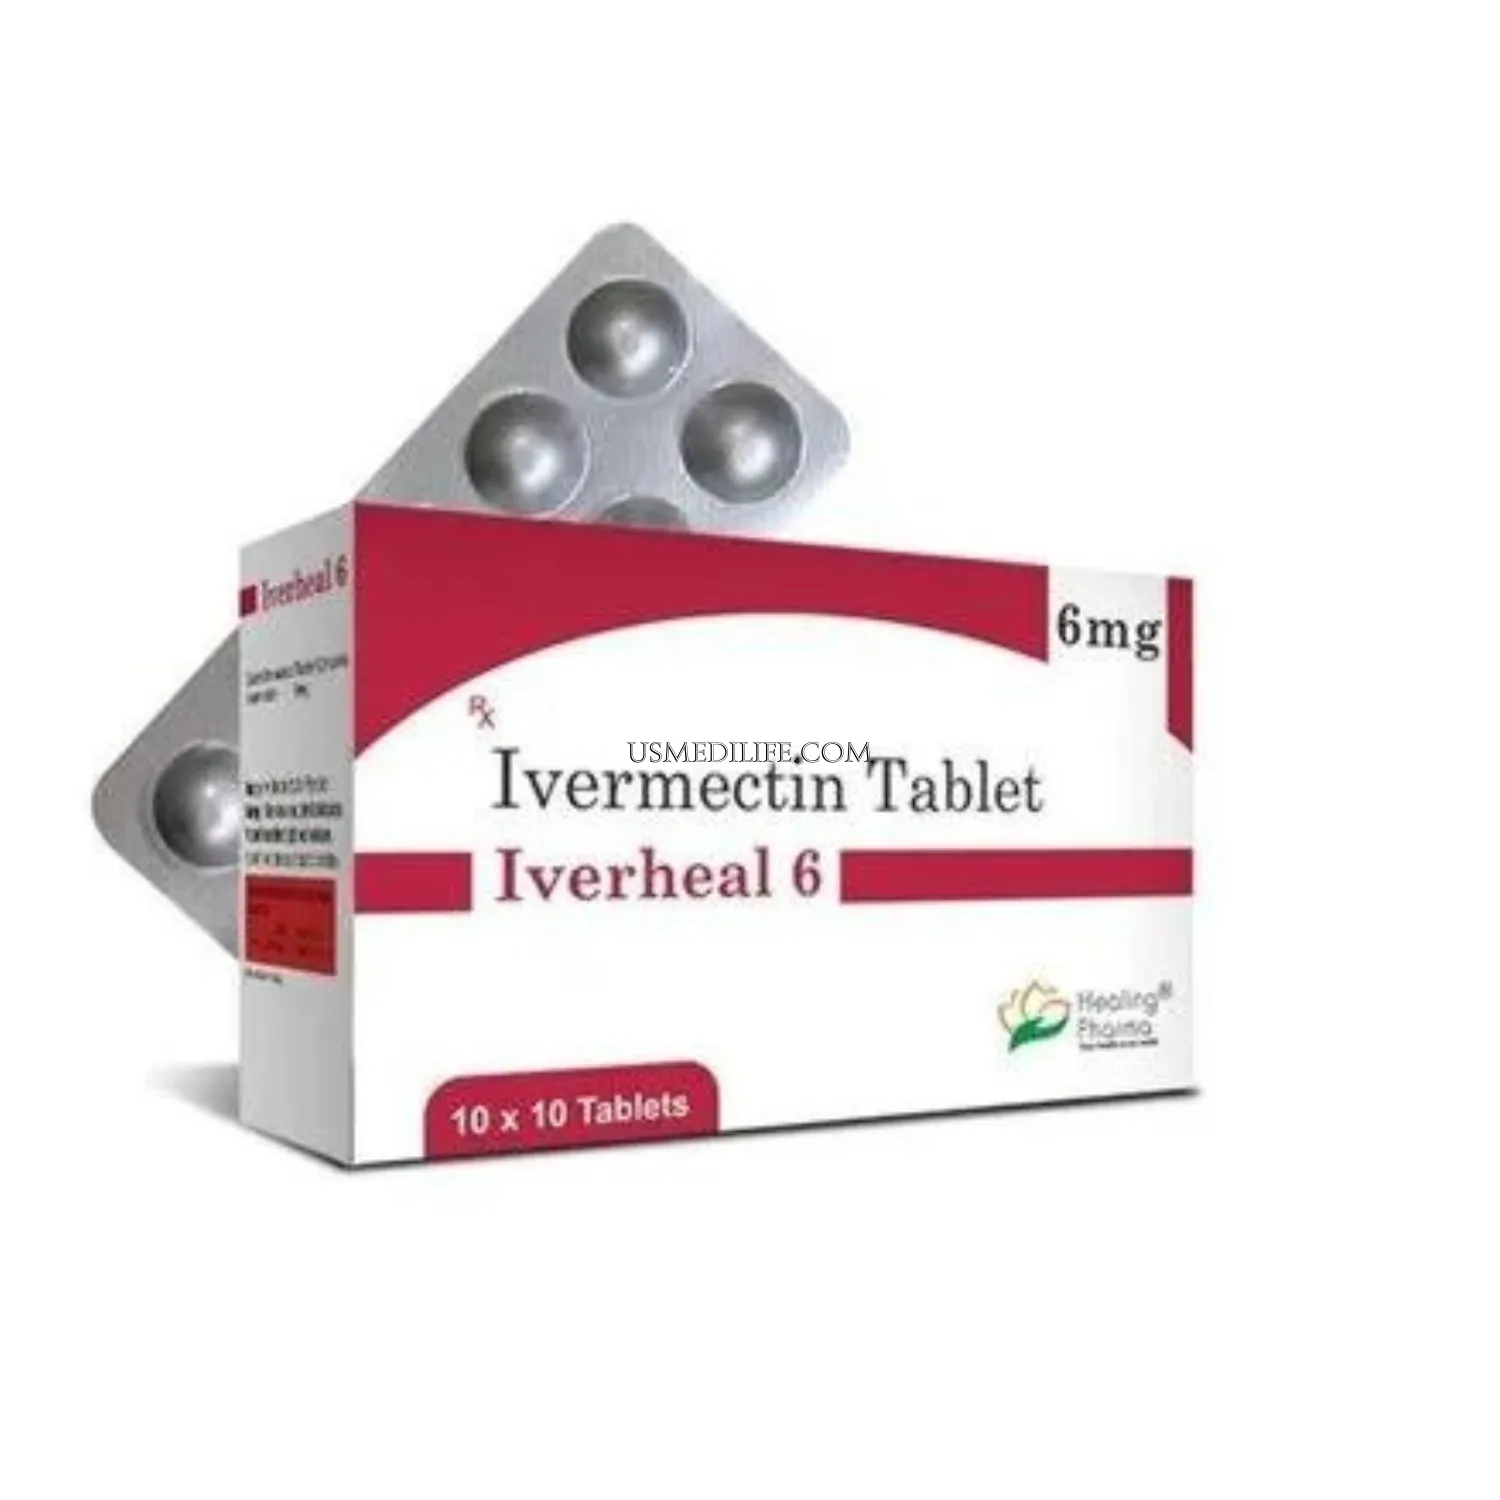 iverheal-6-mg-ivermectine-6                    